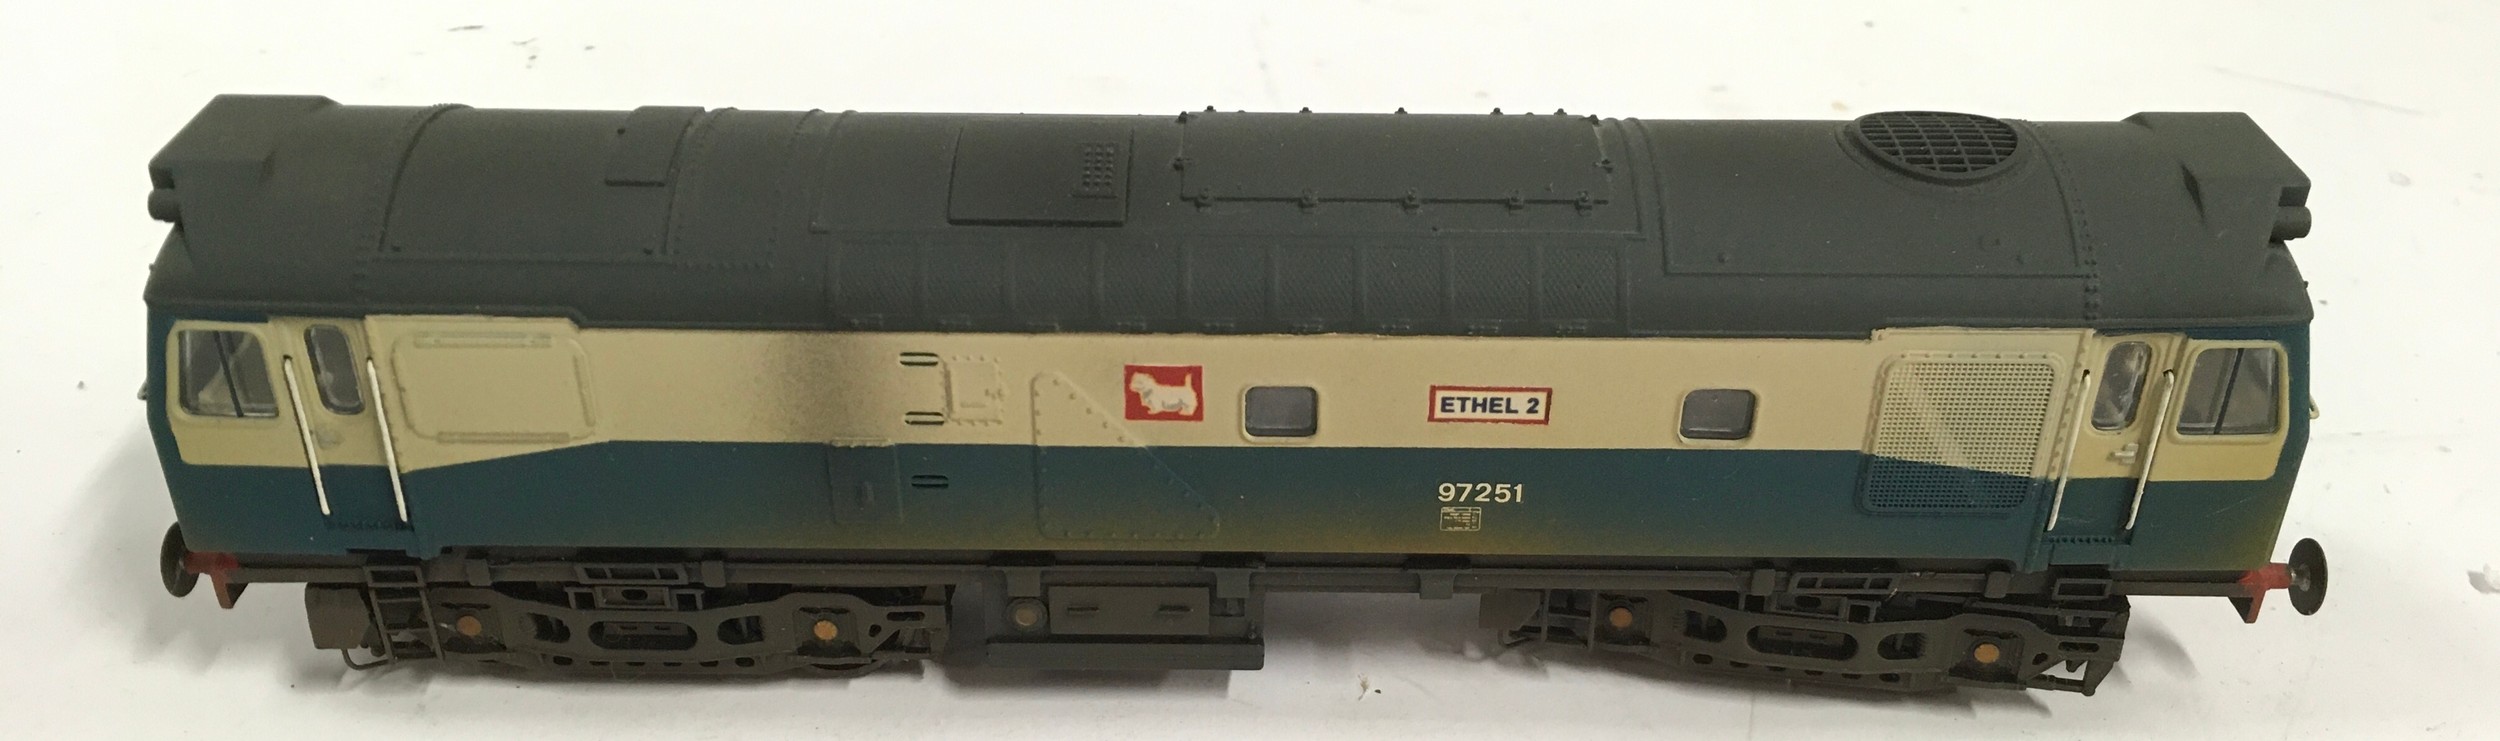 Bachmann OO Gauge Ethel 2 Diesel locomotive 97251 blue grey weathered. Appears Excellent in wrong - Image 3 of 3